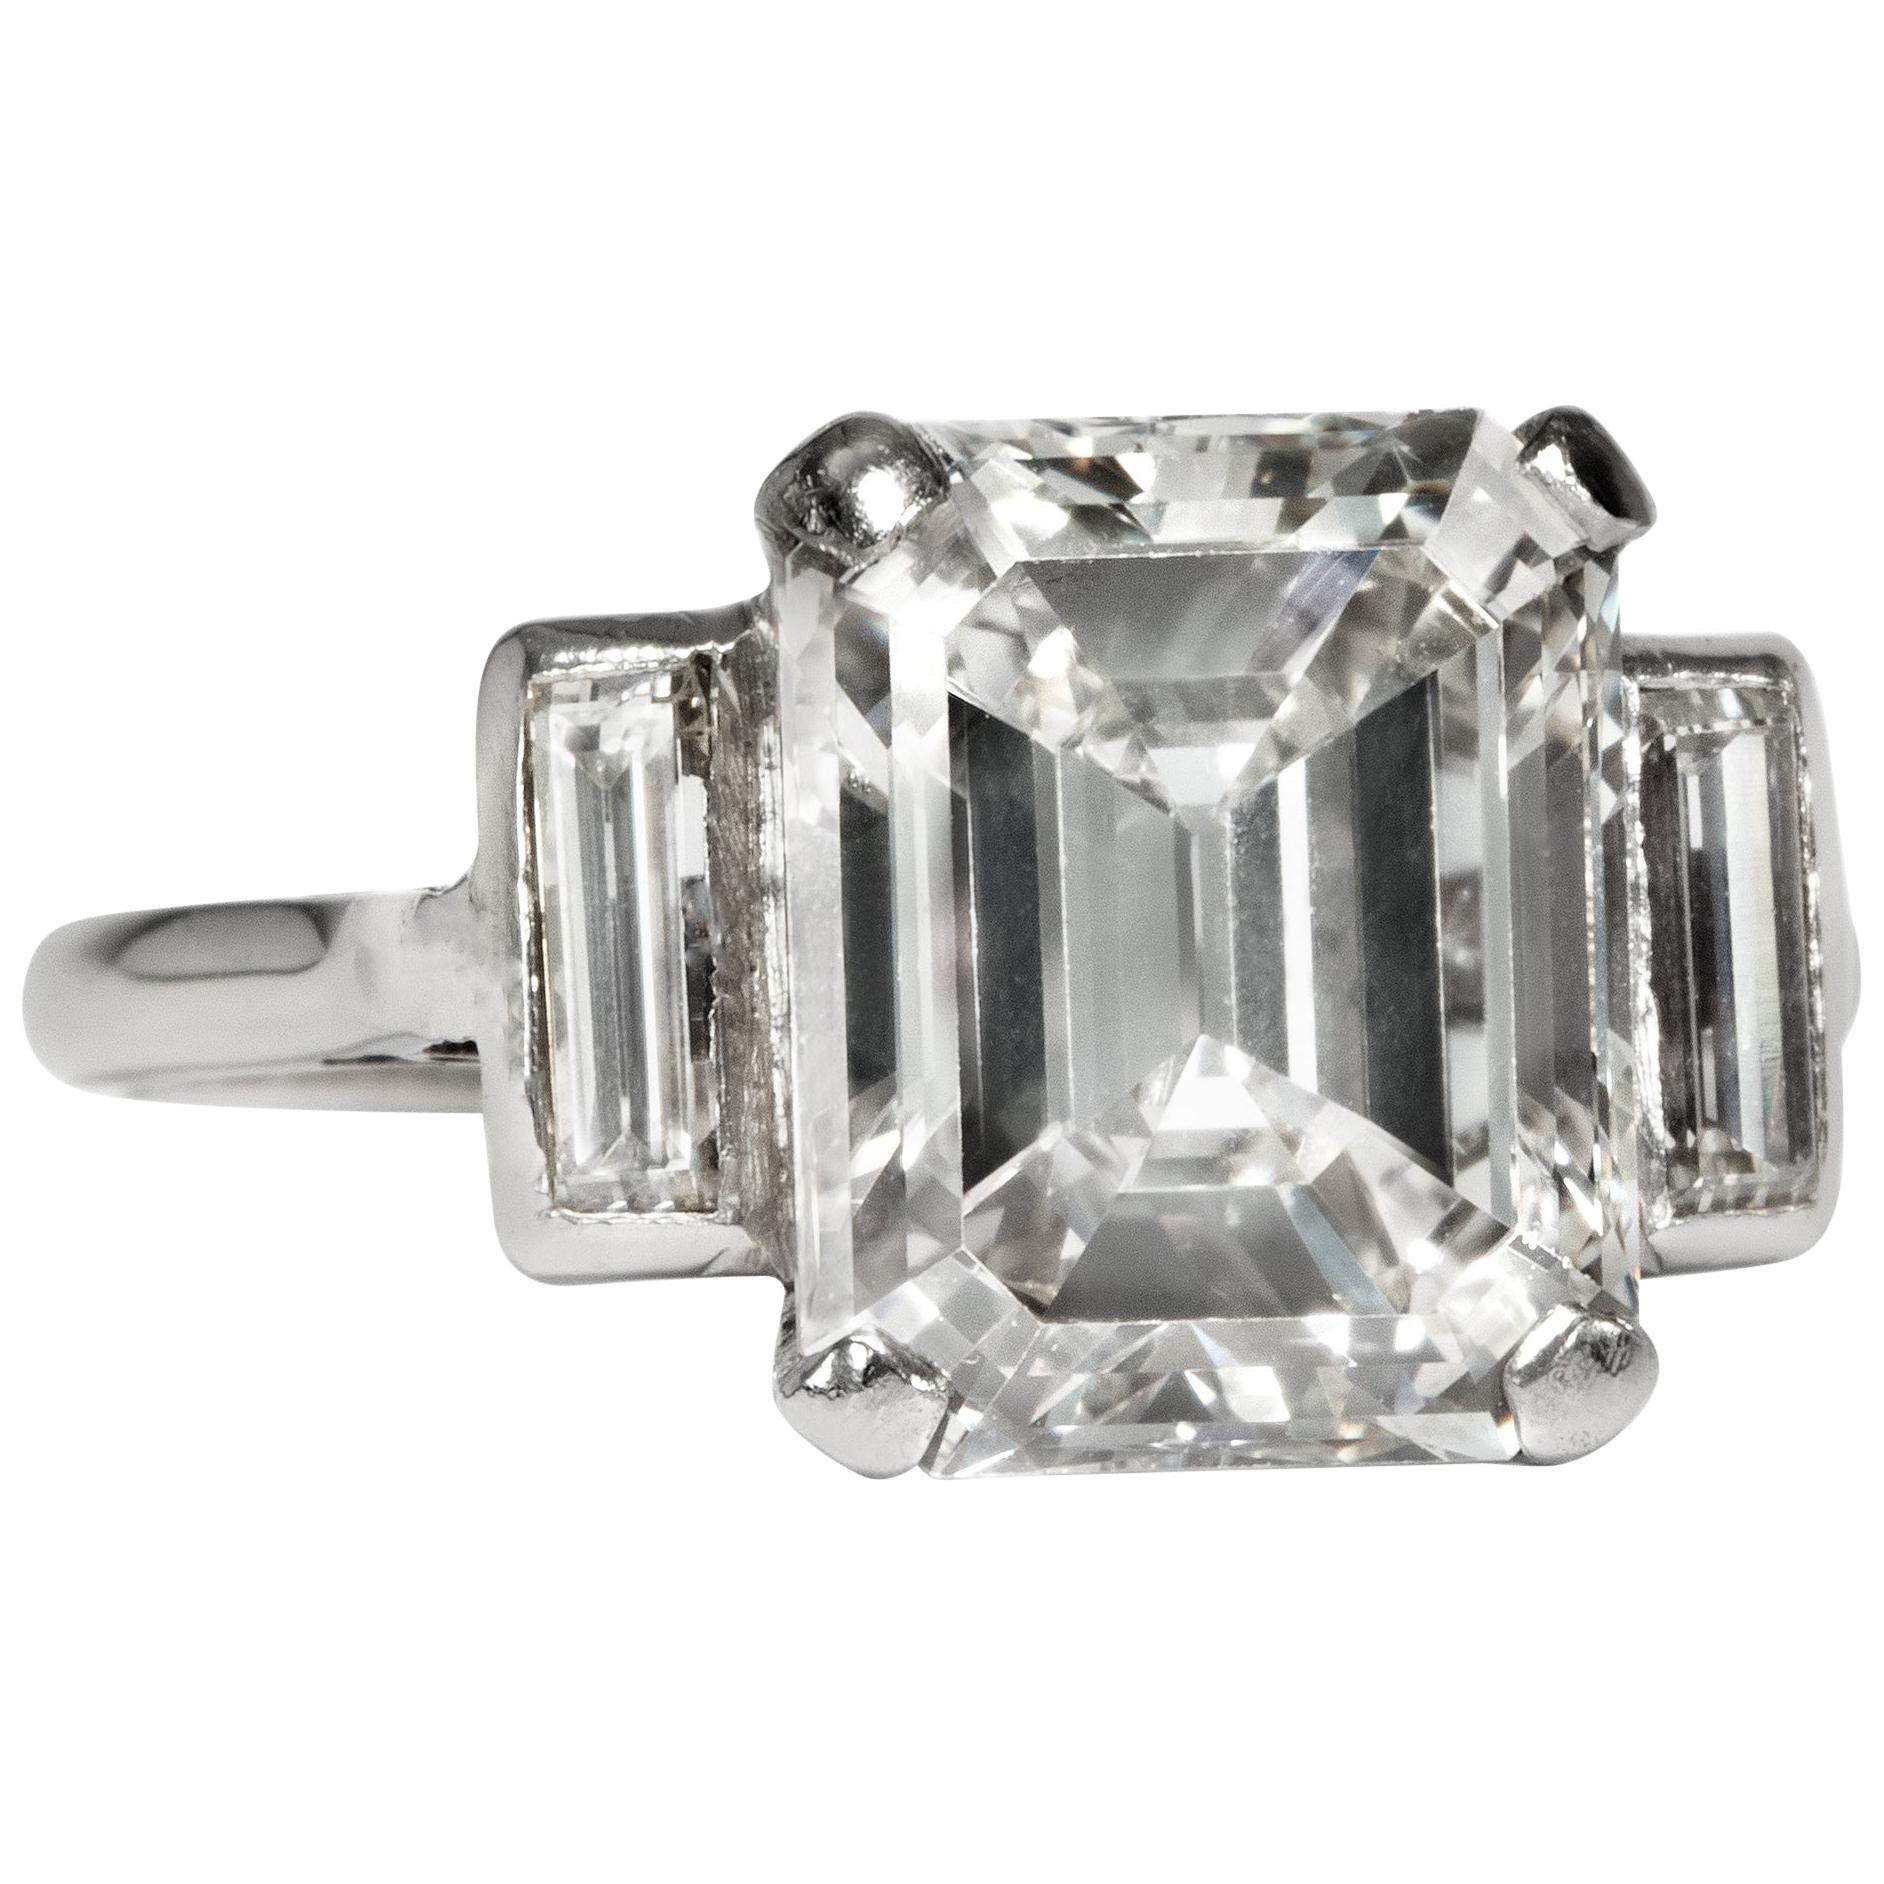 Certified 5.012 Carat Emerald Cut Diamond Art Deco circa 1935 Engagement Ring